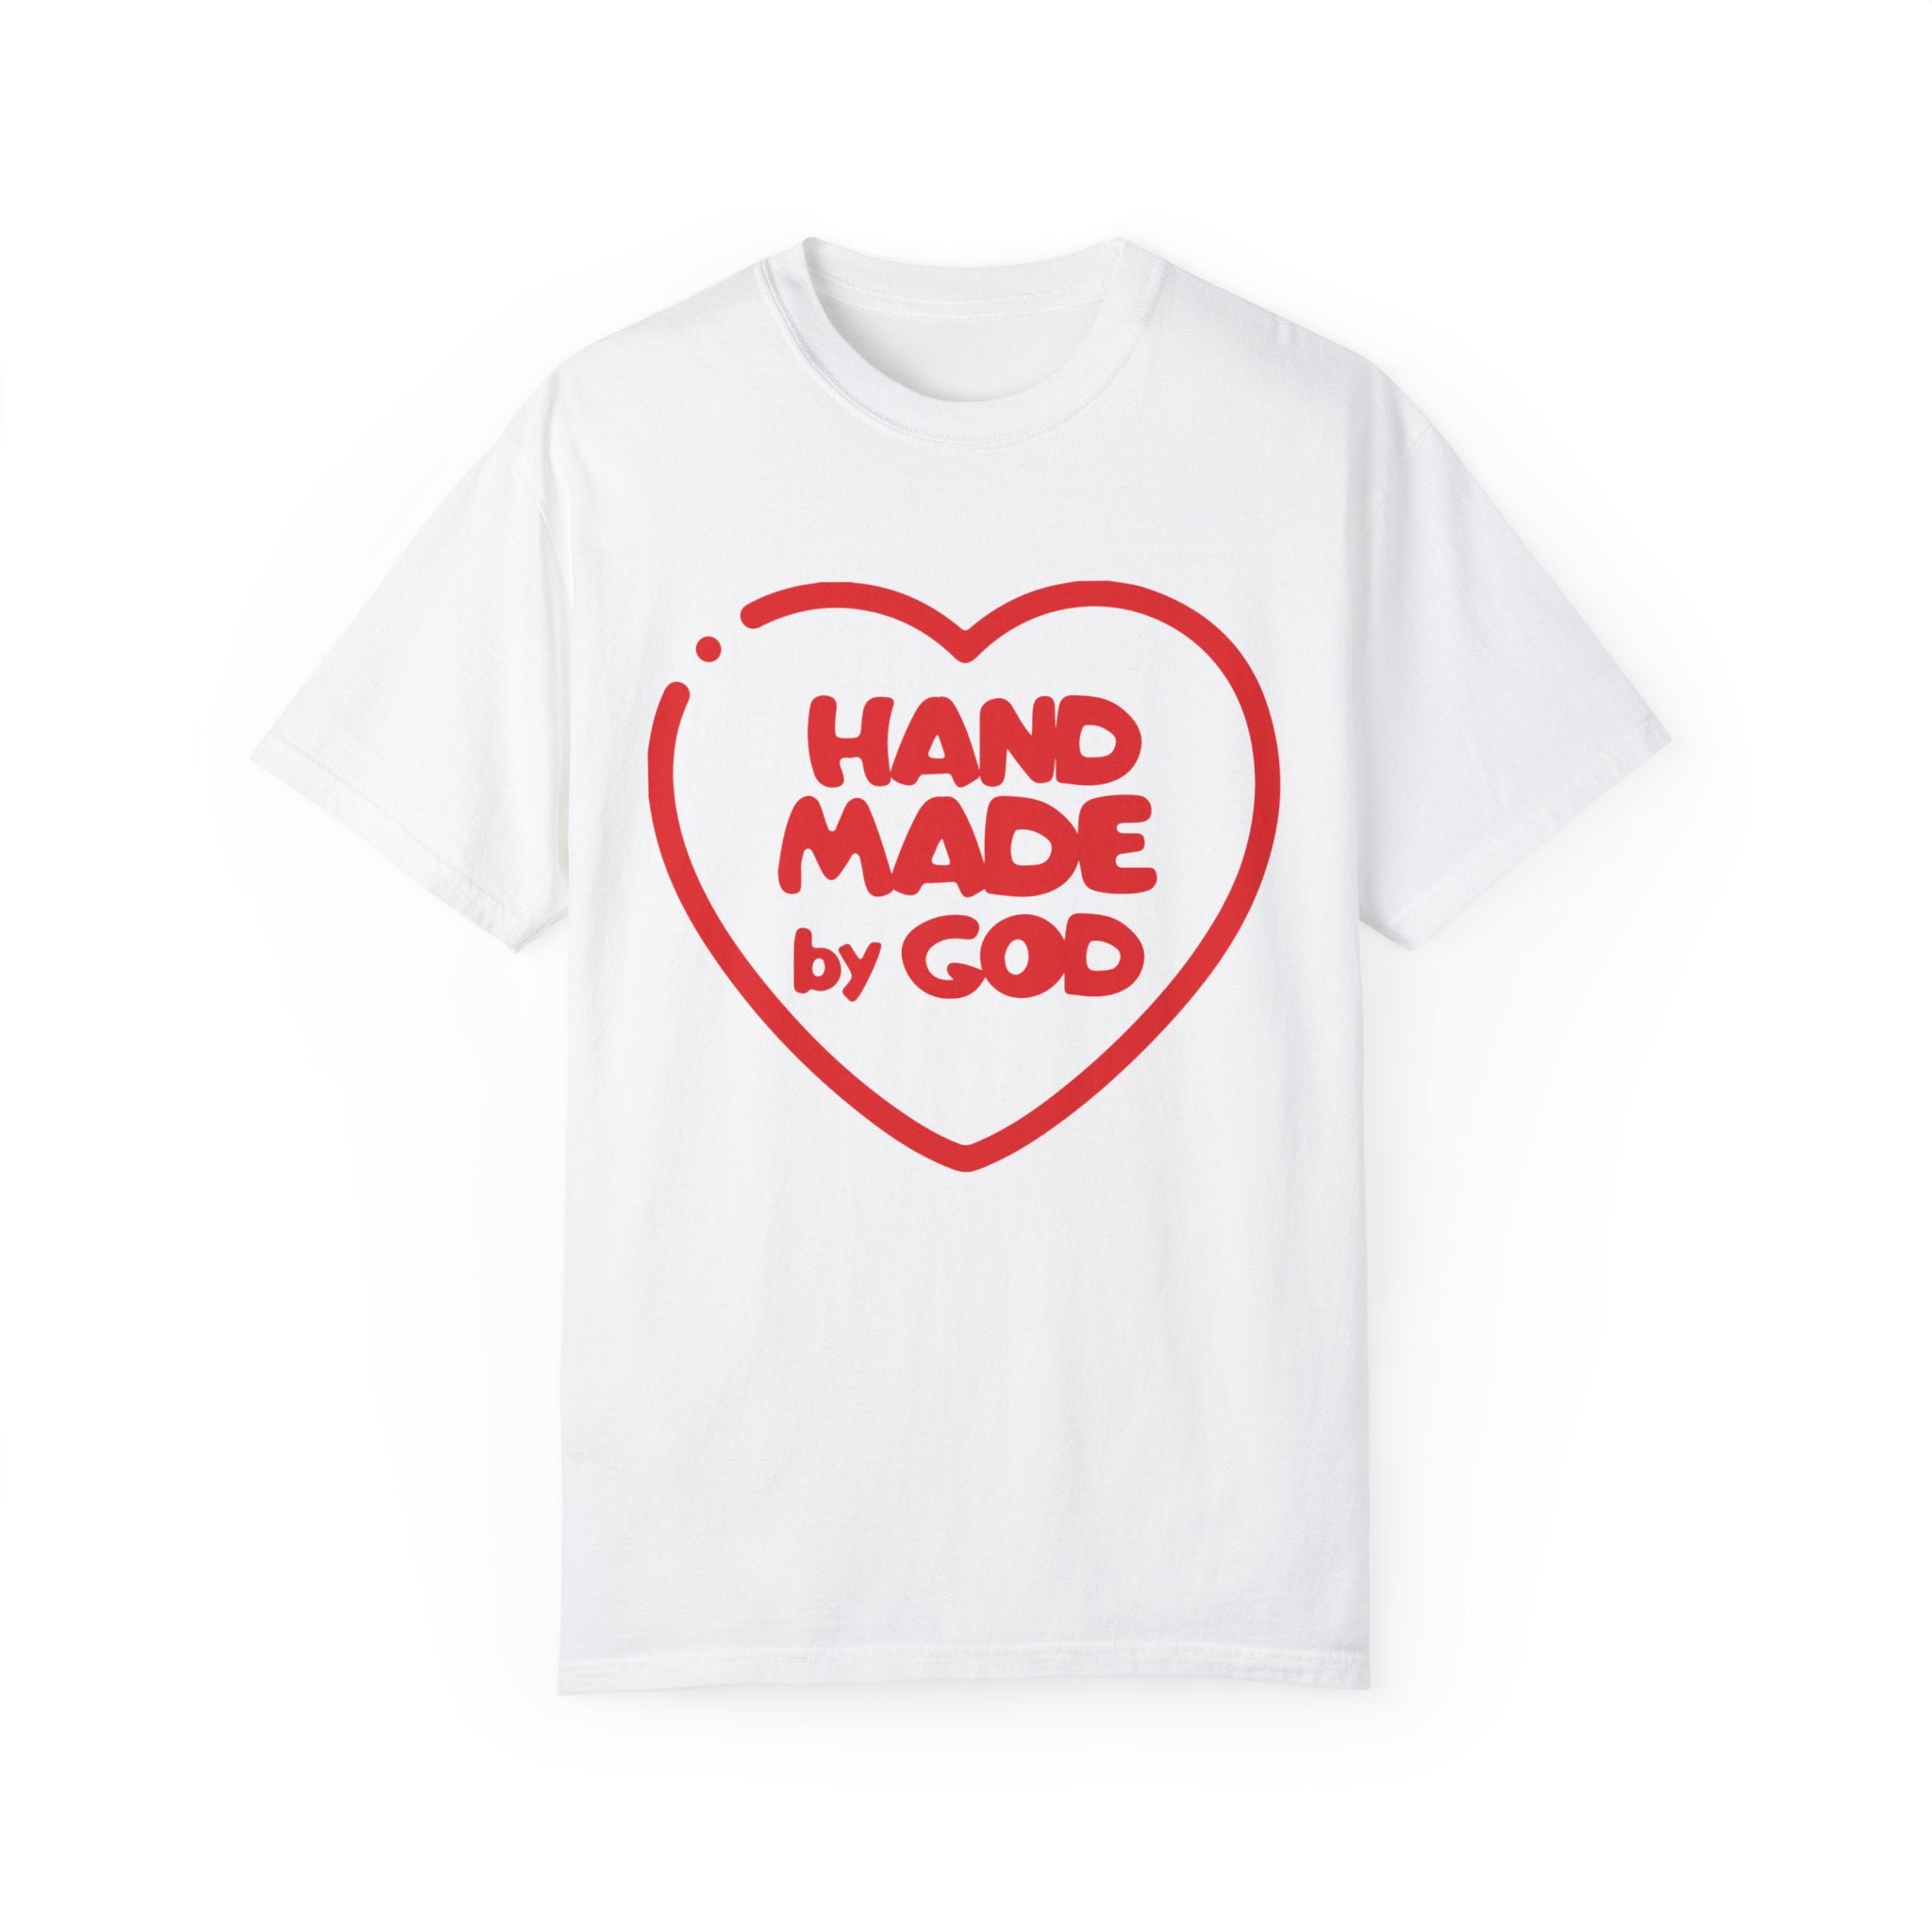 HANDMADE BY GOD T-shirt